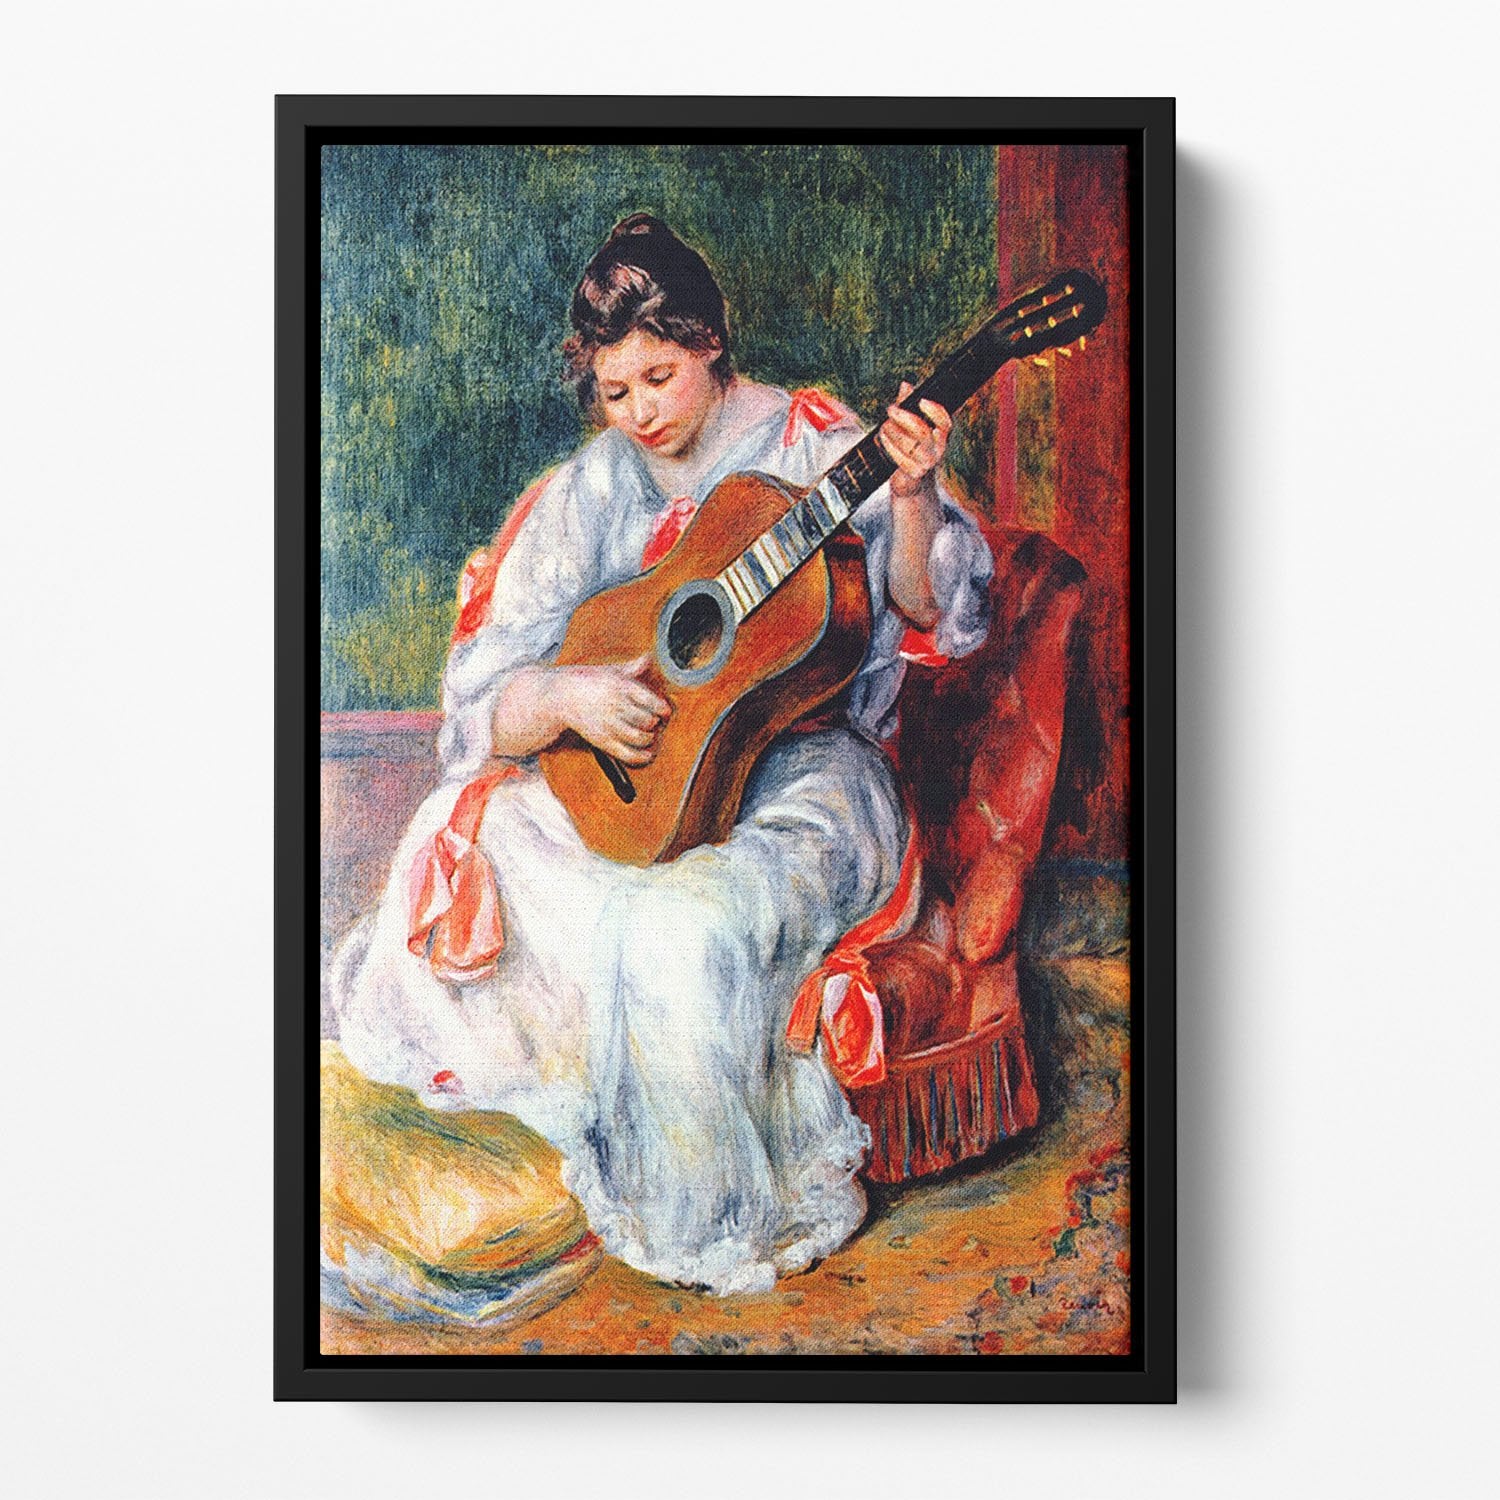 Guitarist by Renoir Floating Framed Canvas